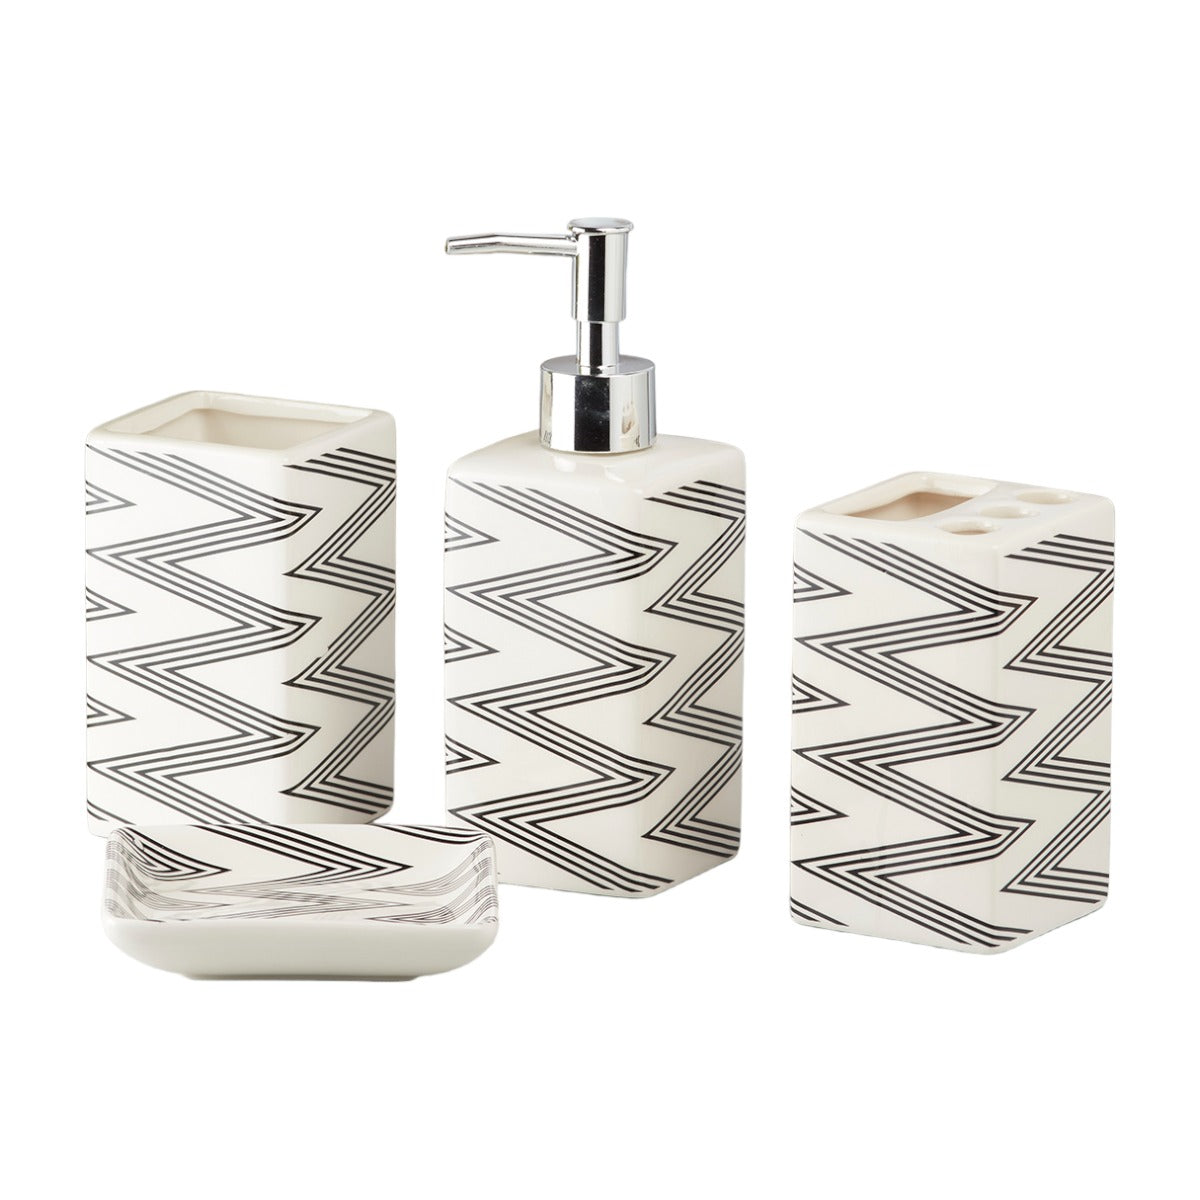 Ceramic Bathroom Accessories Set of 4 Bath Set with Soap Dispenser (9845)